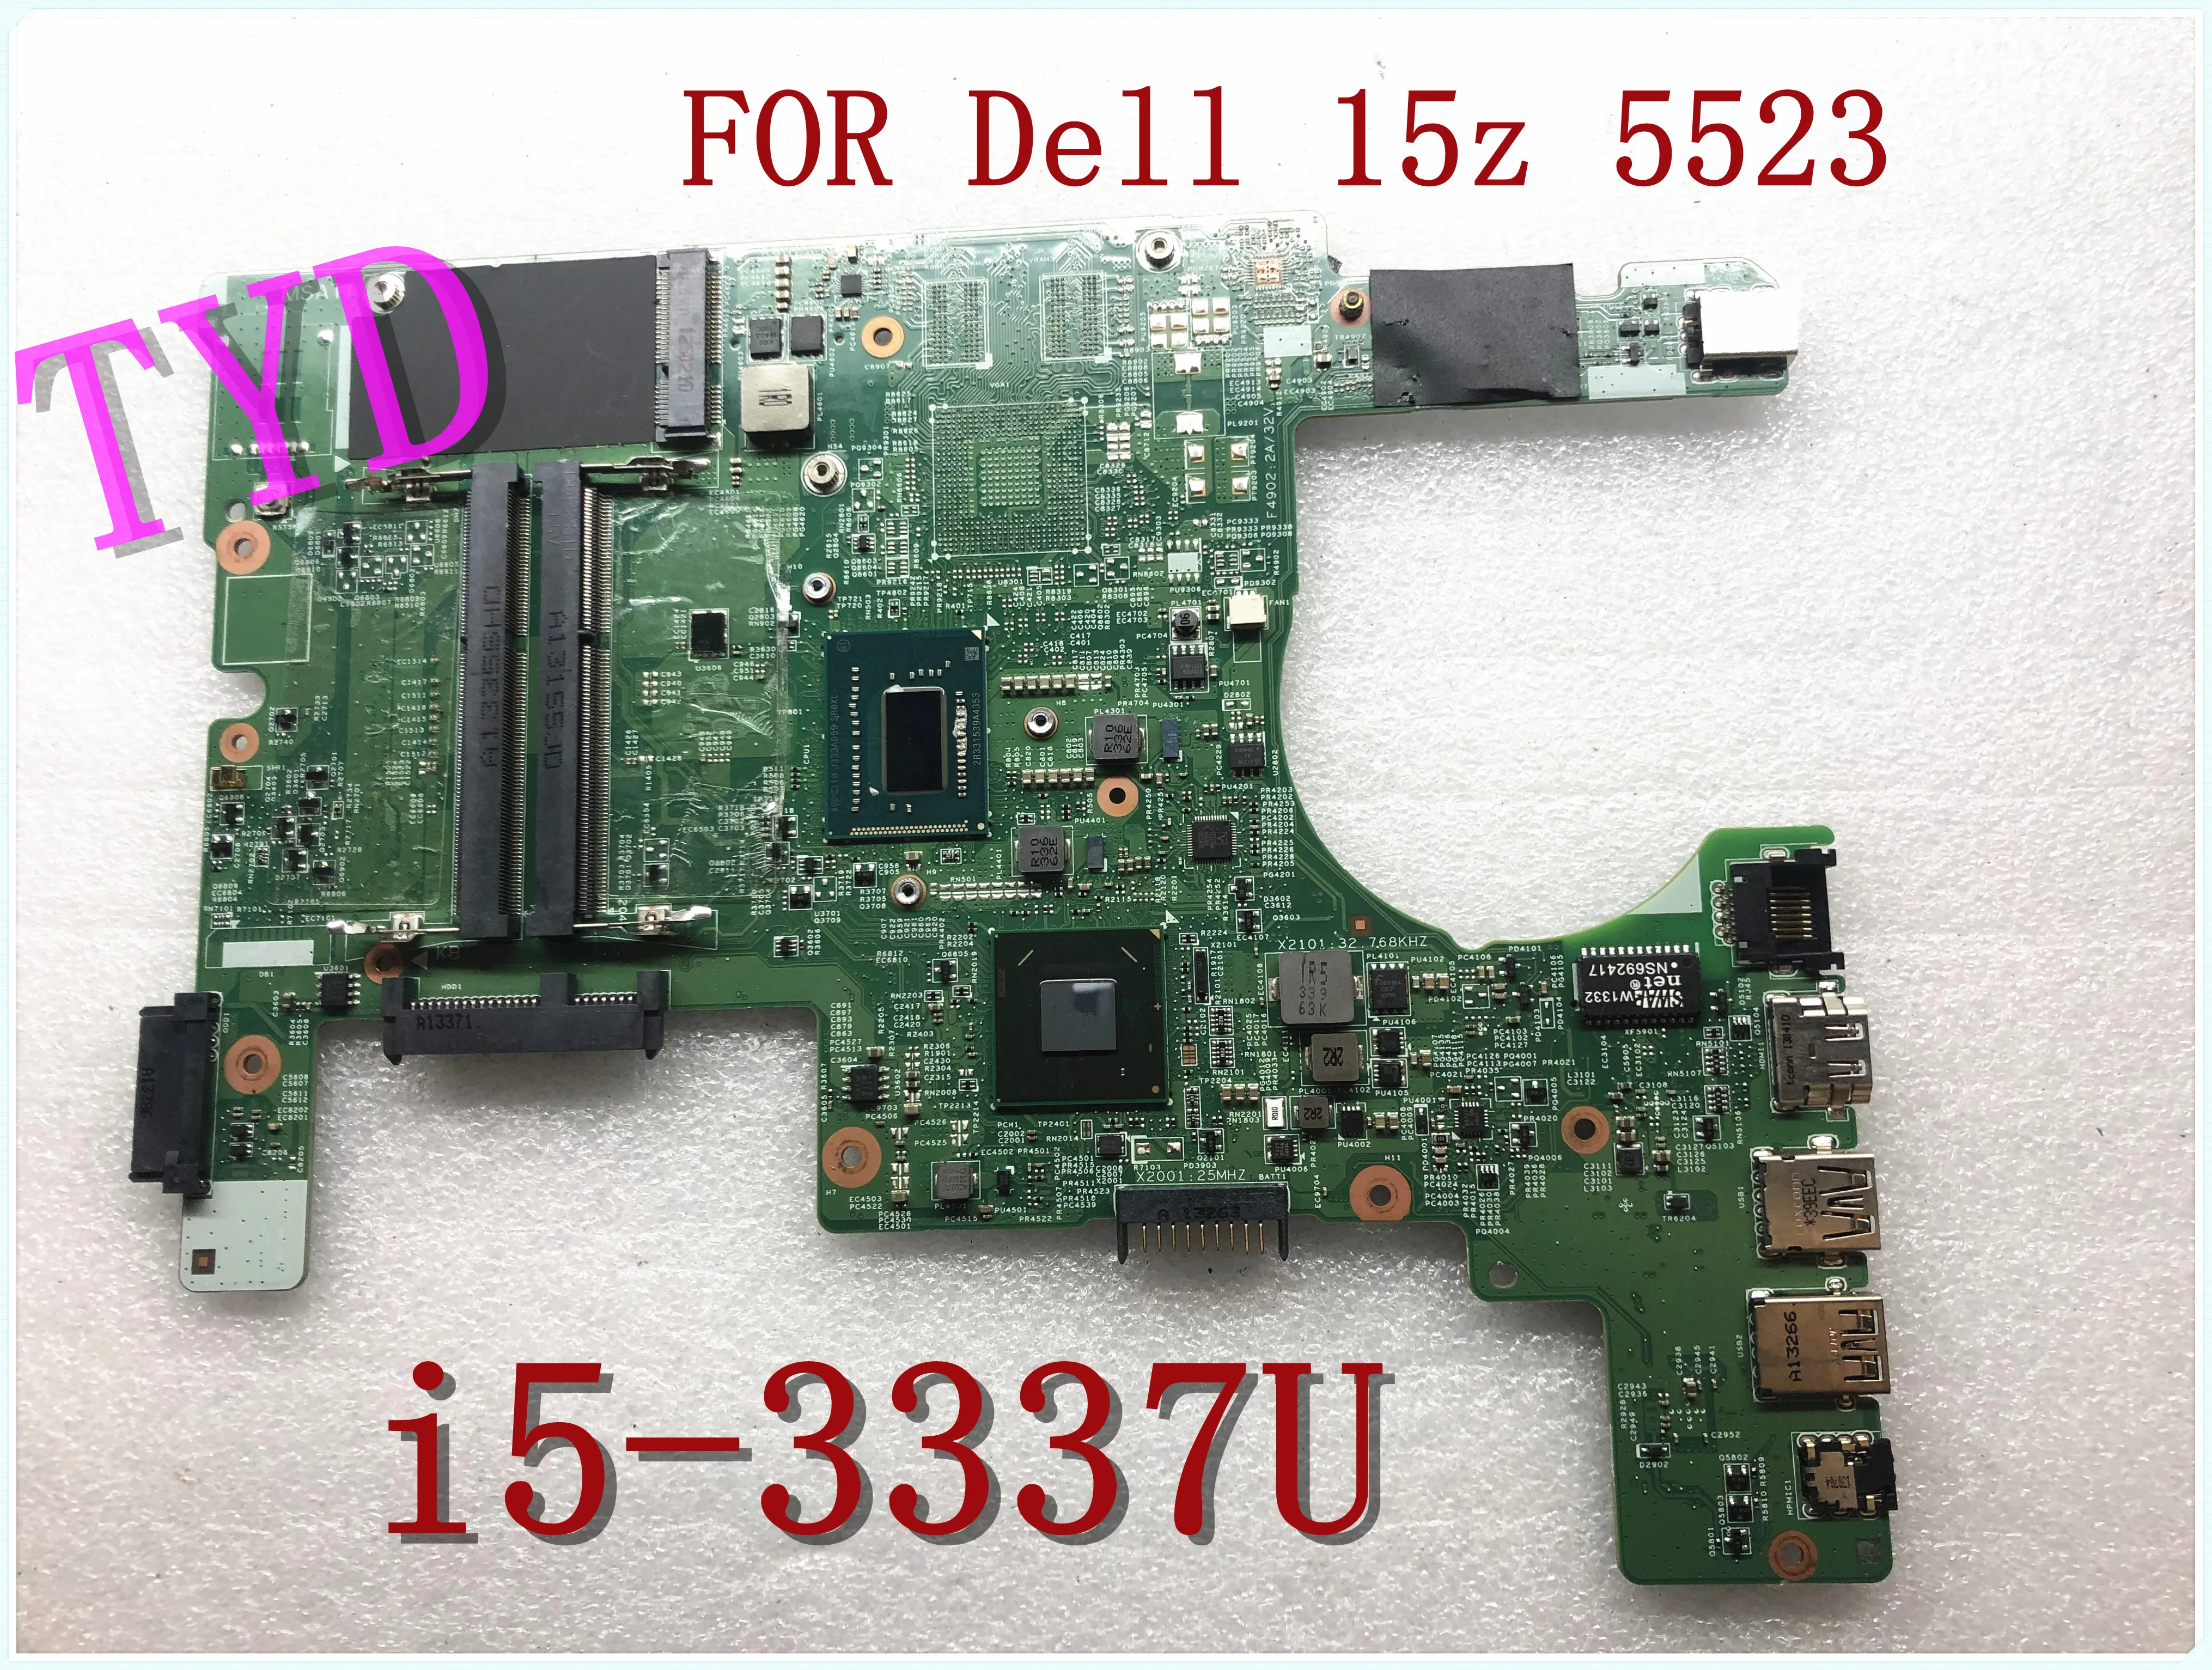 Фото CN-013Y69 для Dell 15z 5523 оригинальная материнская плата i5-3337U FCBGA1023 DDR3 13Y69 013Y69 | Компьютеры